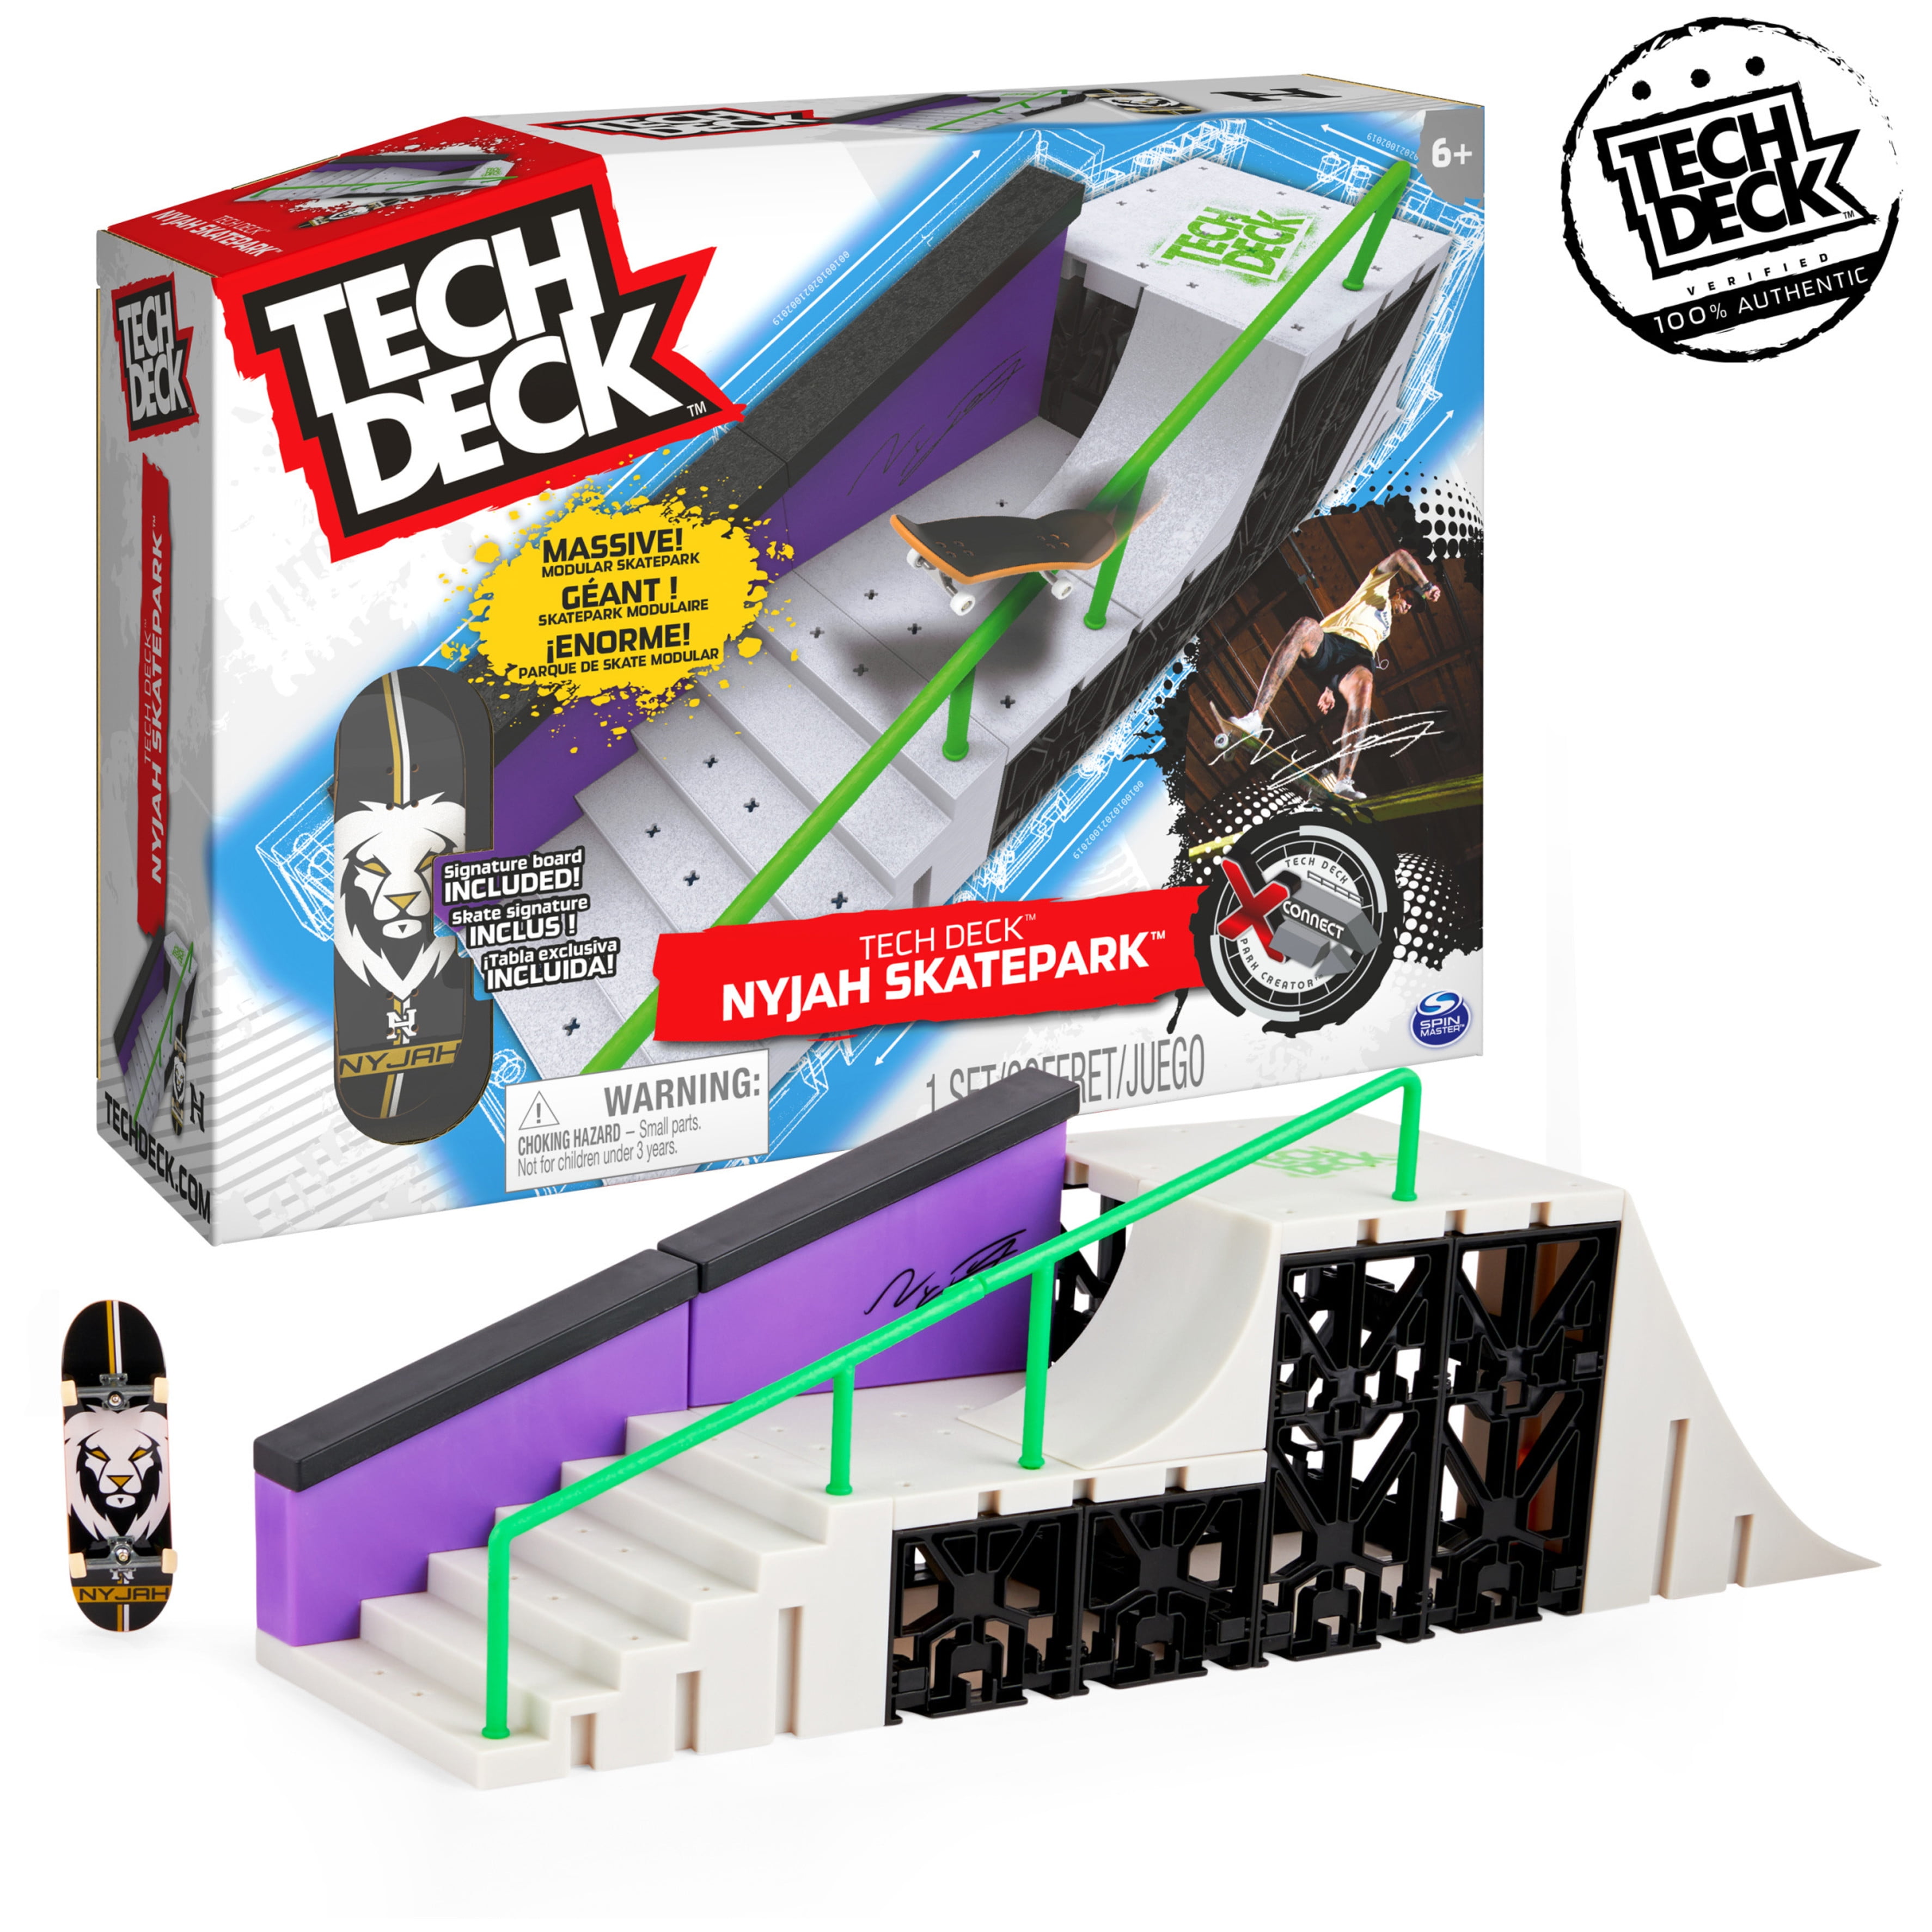 TECH DECK World Edition série limitée skate/touche Toy Machine Ultra Rare! 